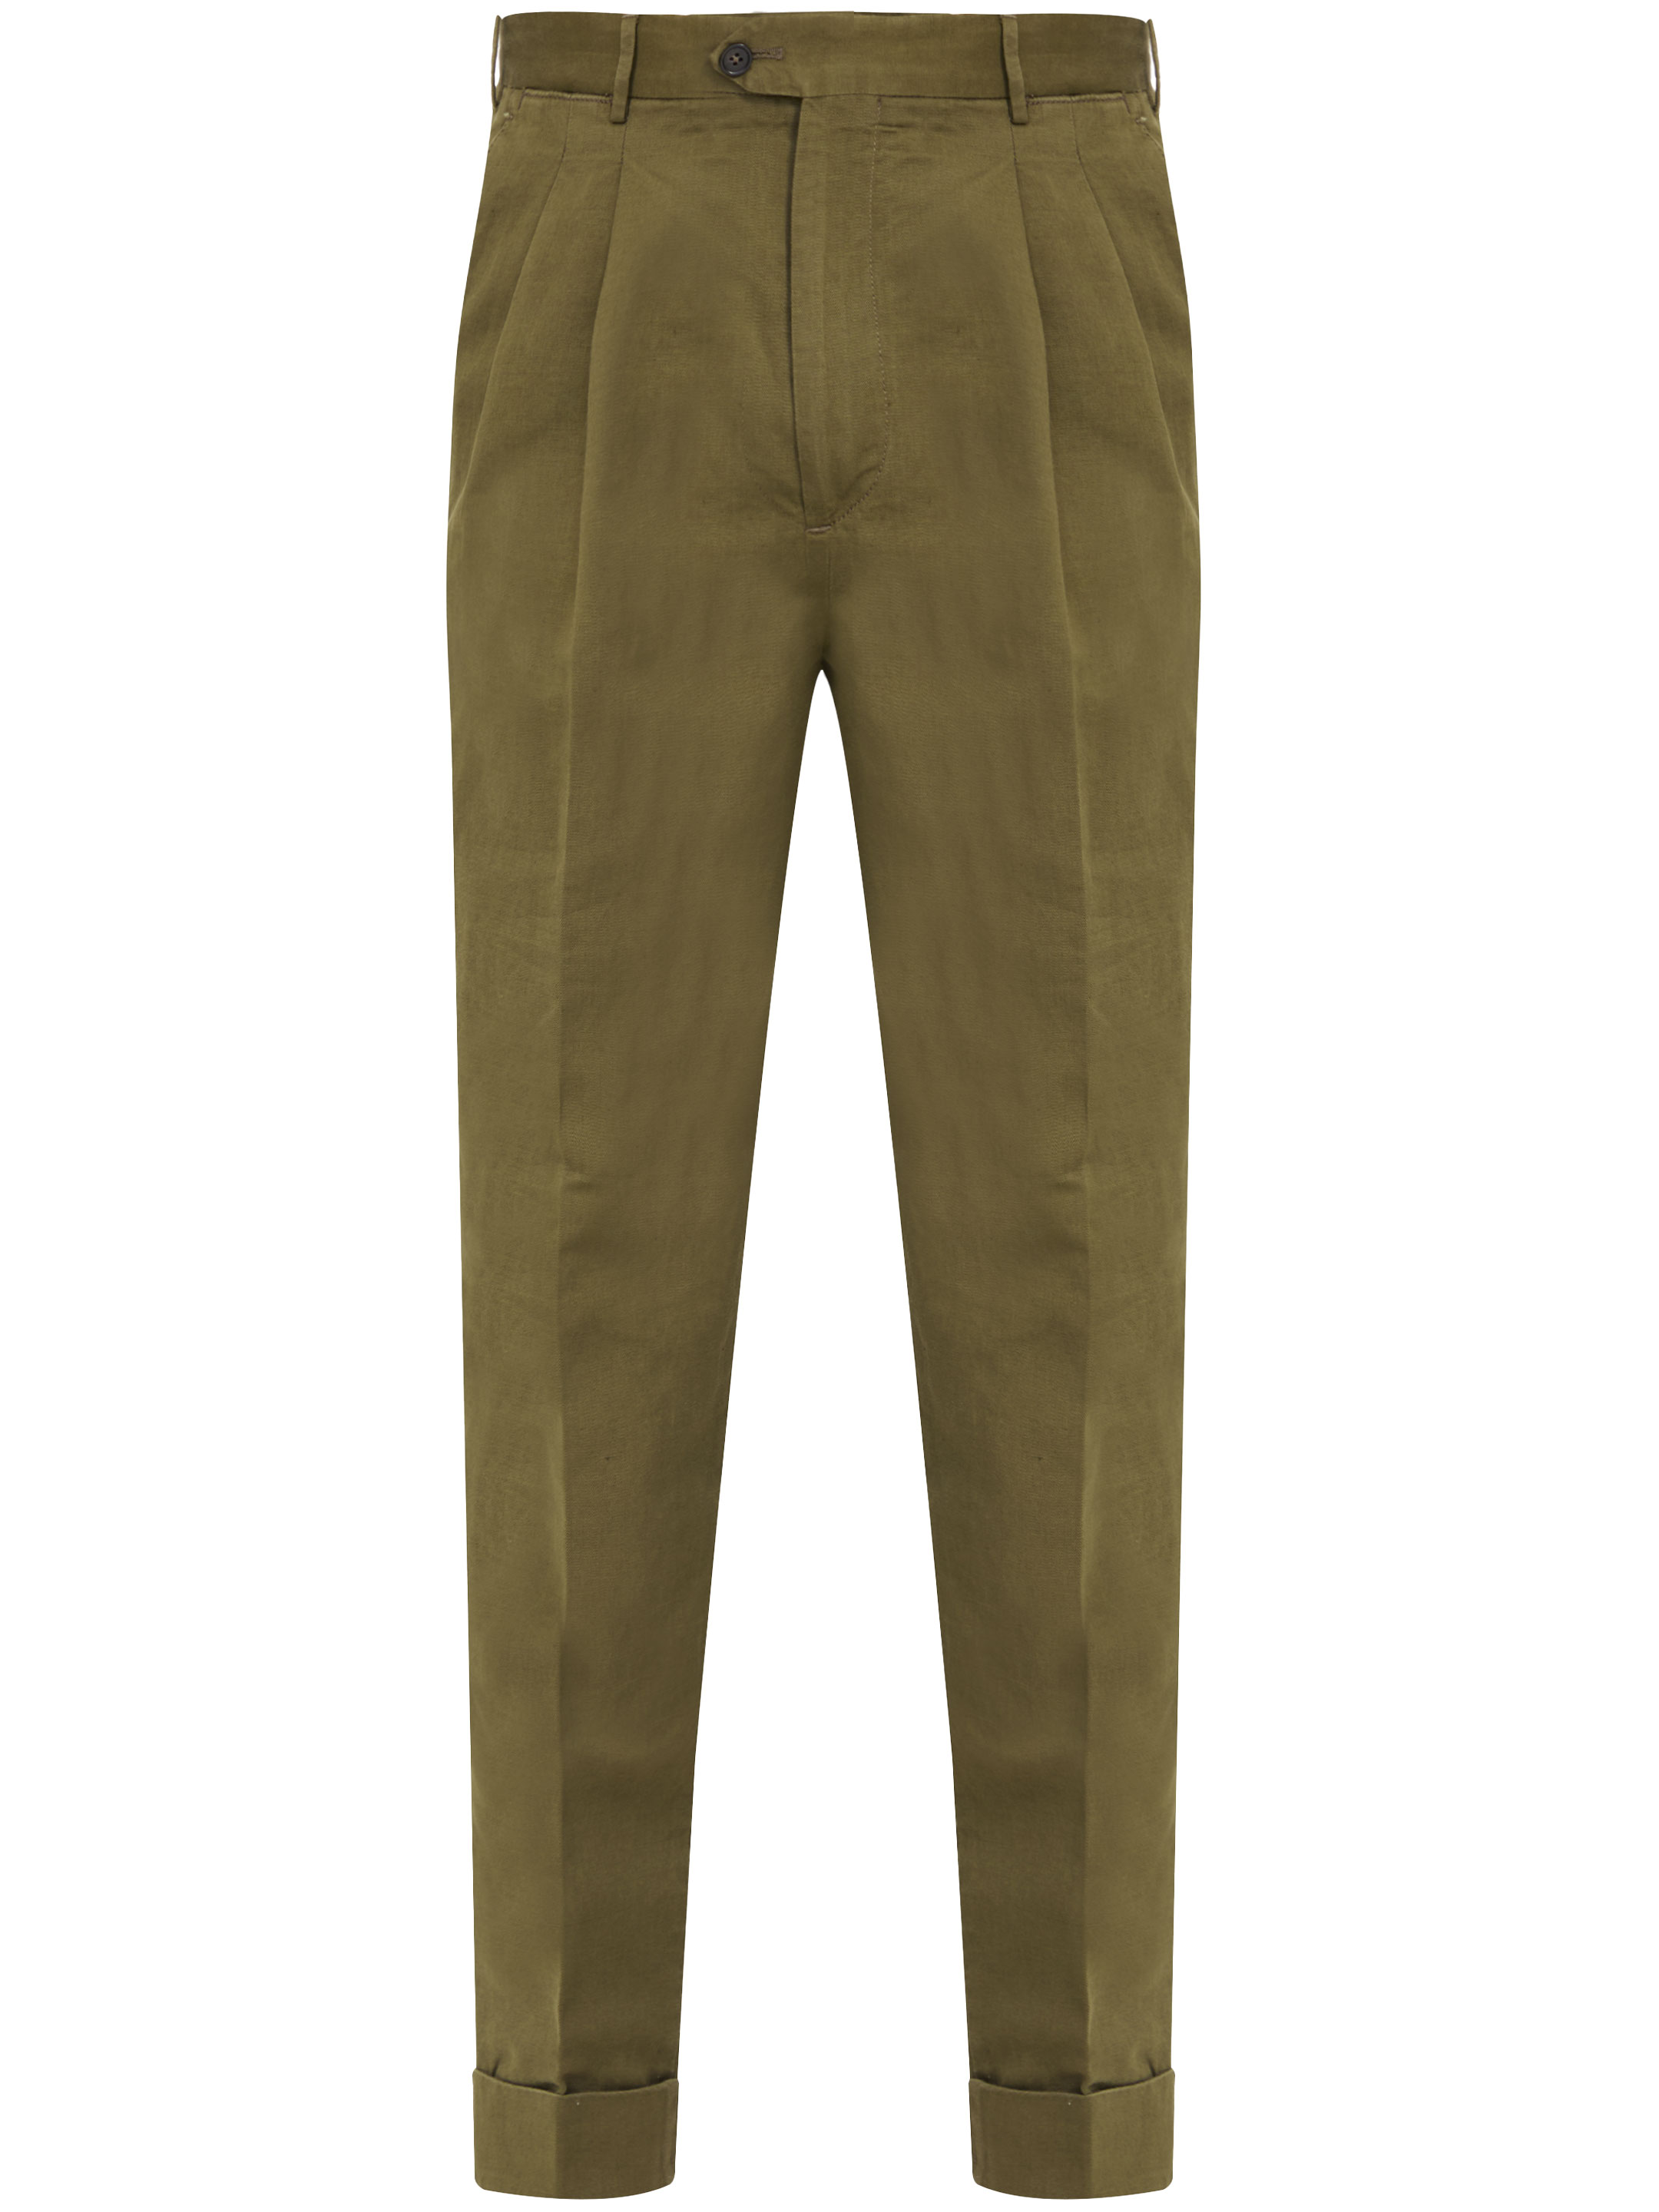 Брюки Pt Torino Cotton and linen, зеленый брюки uniqlo linen cotton blend tapered зеленый